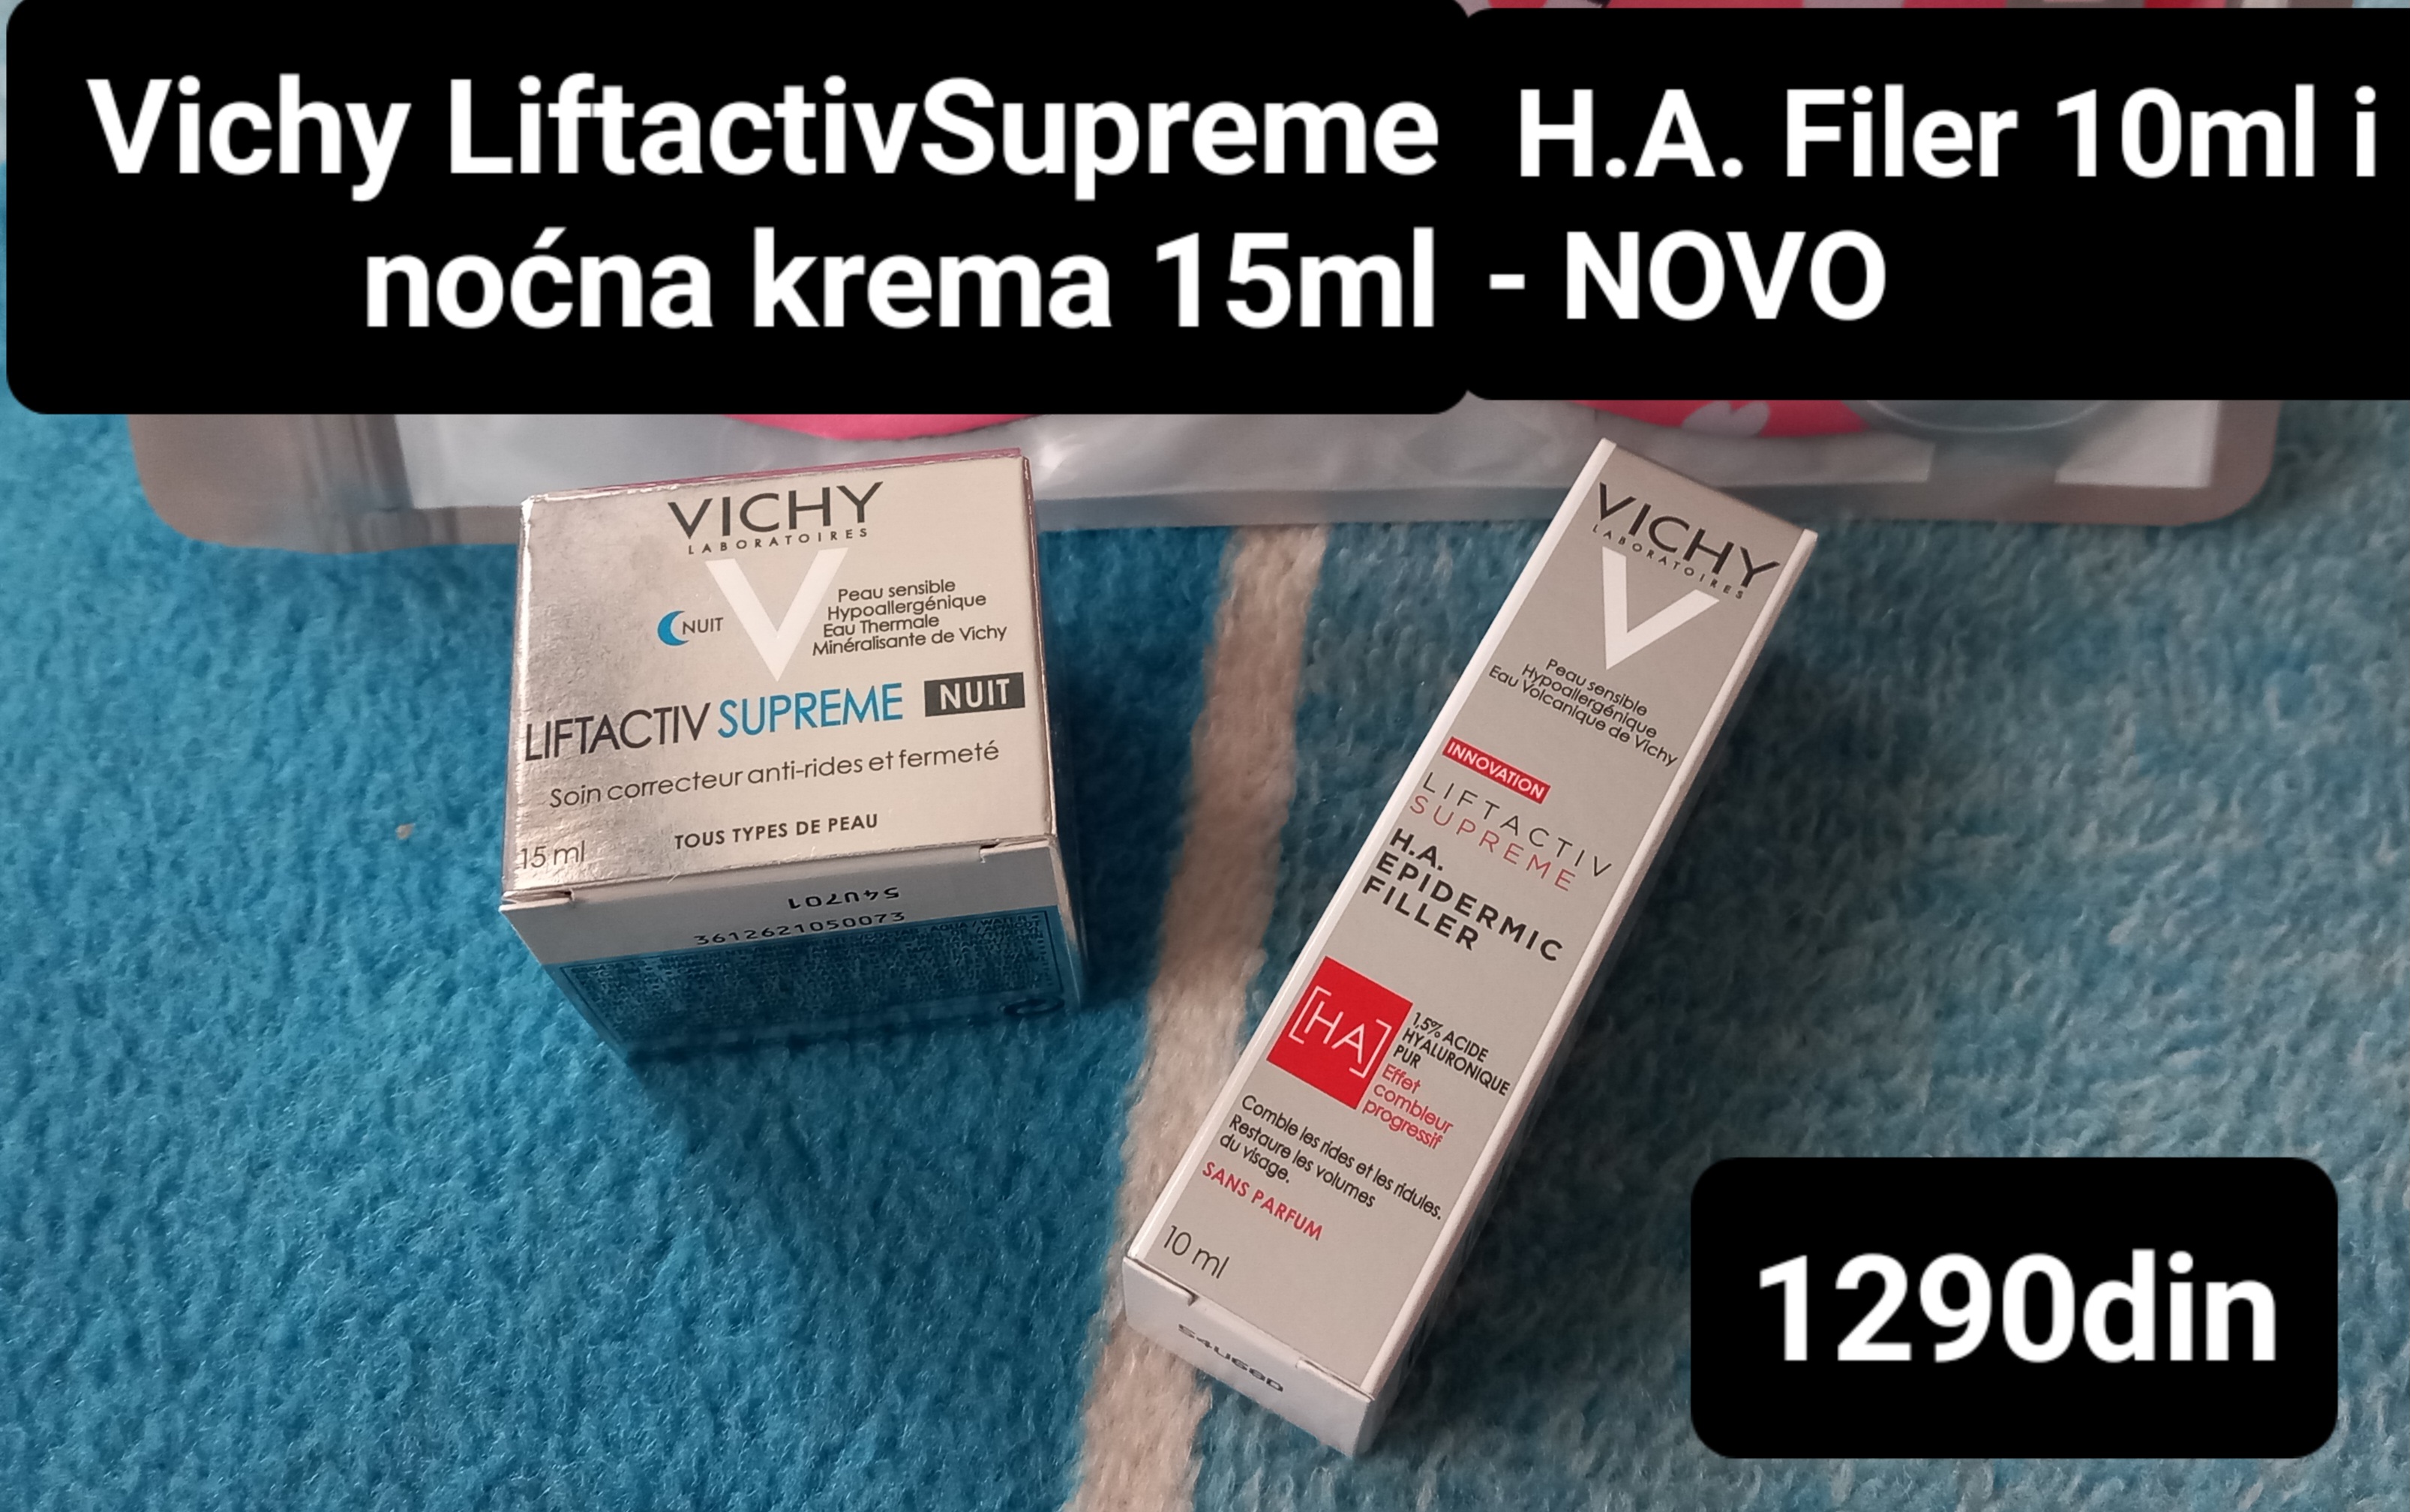 Vichy liftactiv noćna krema serum koncentrat - NOVO